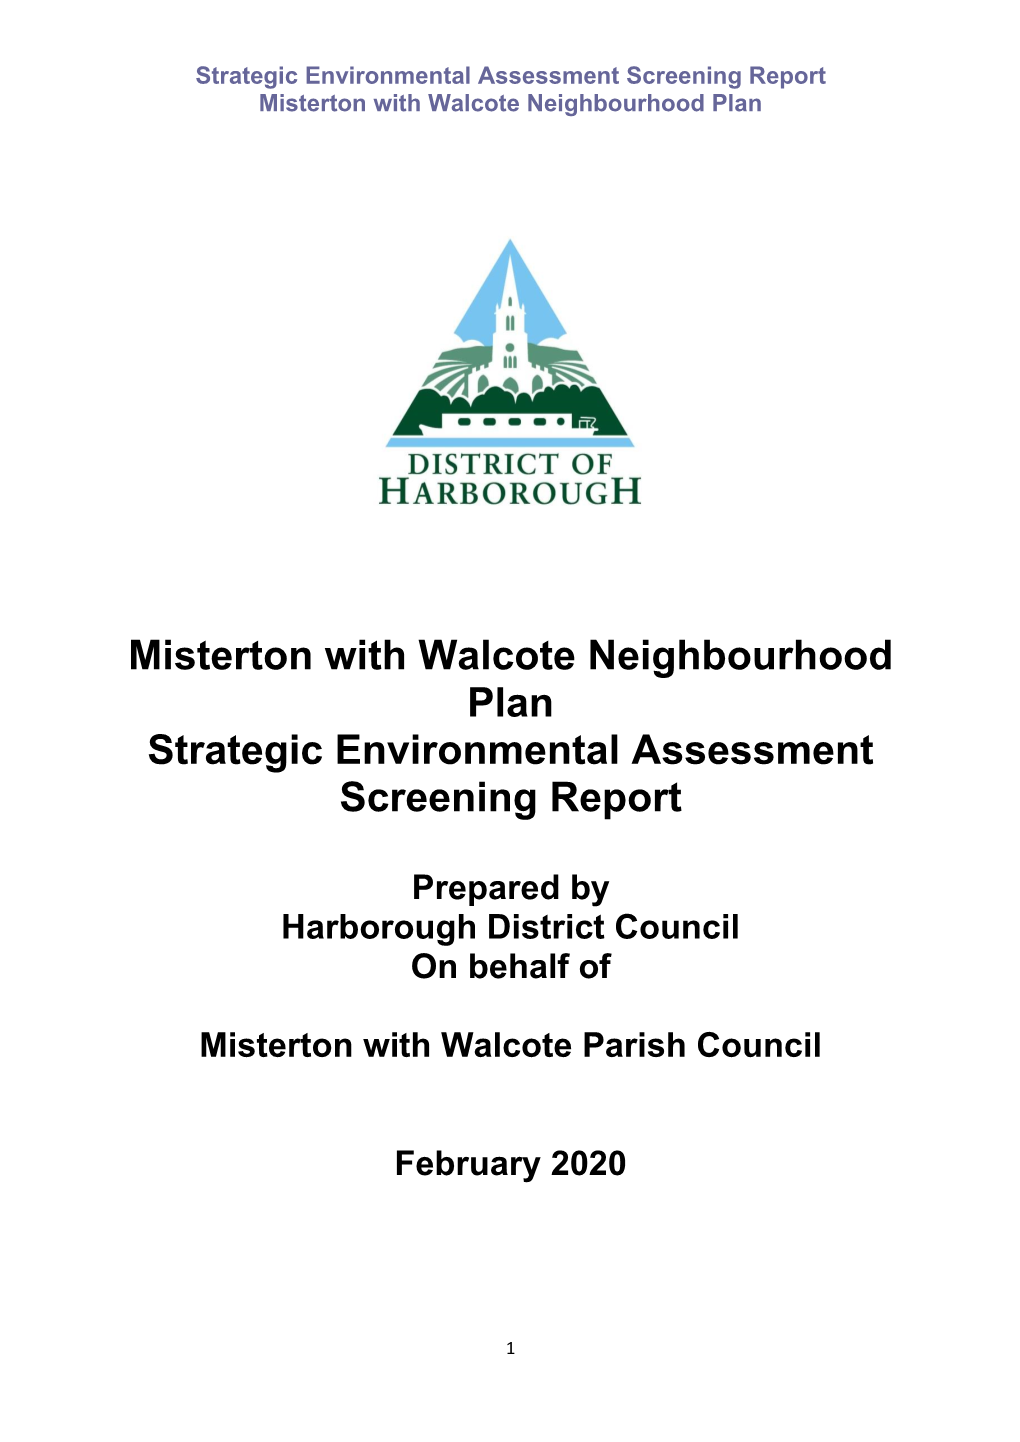 Misterton with Walcote Neighbourhood Plan Strategic Environmental Assessment Screening Report